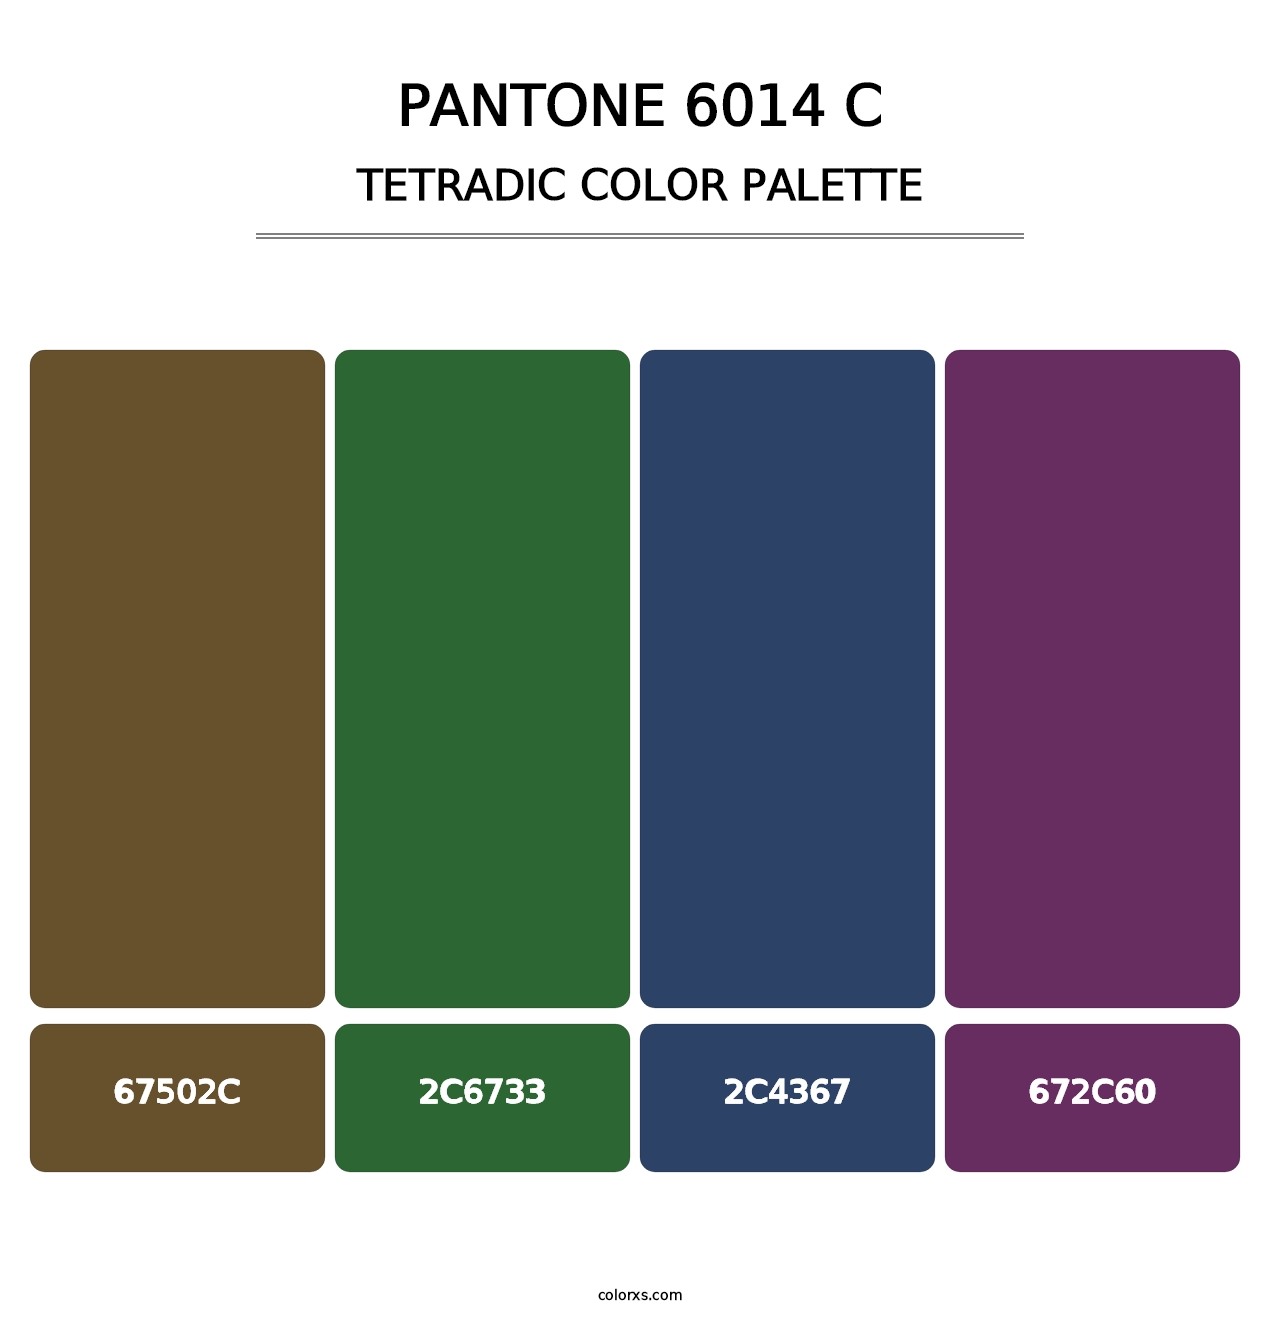 PANTONE 6014 C - Tetradic Color Palette